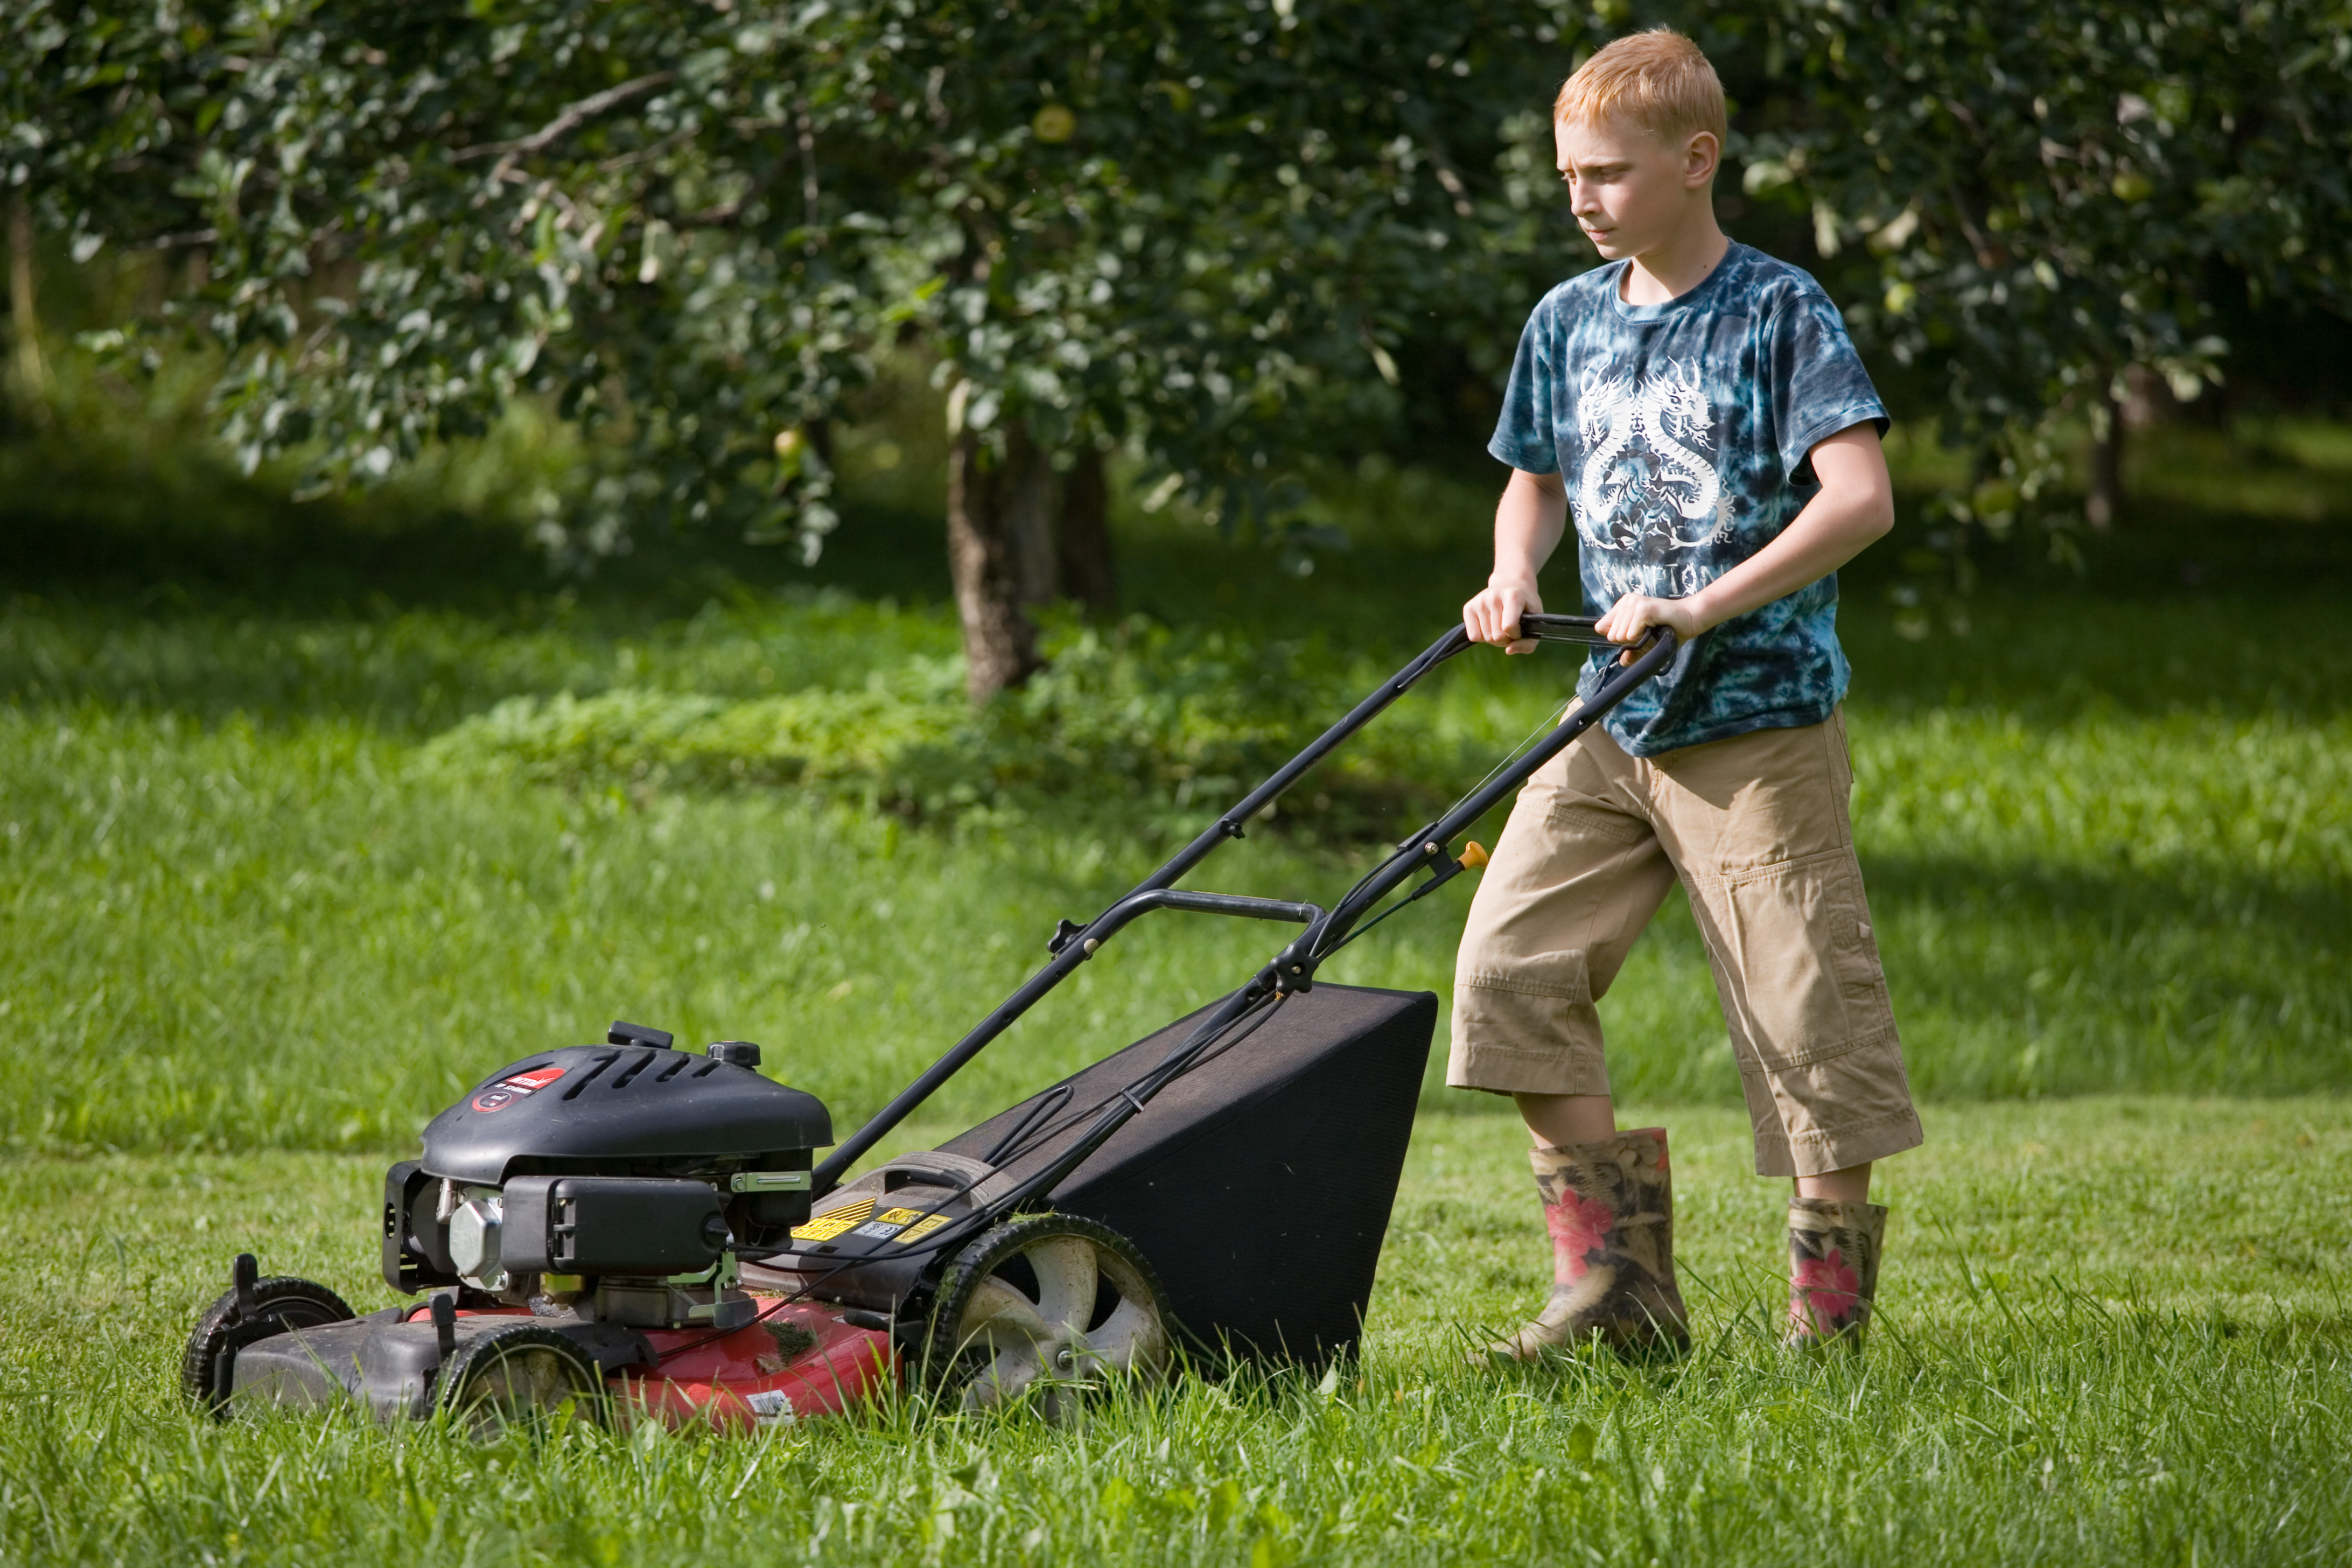 A boy mowing a lawn | Source: Shutterstock